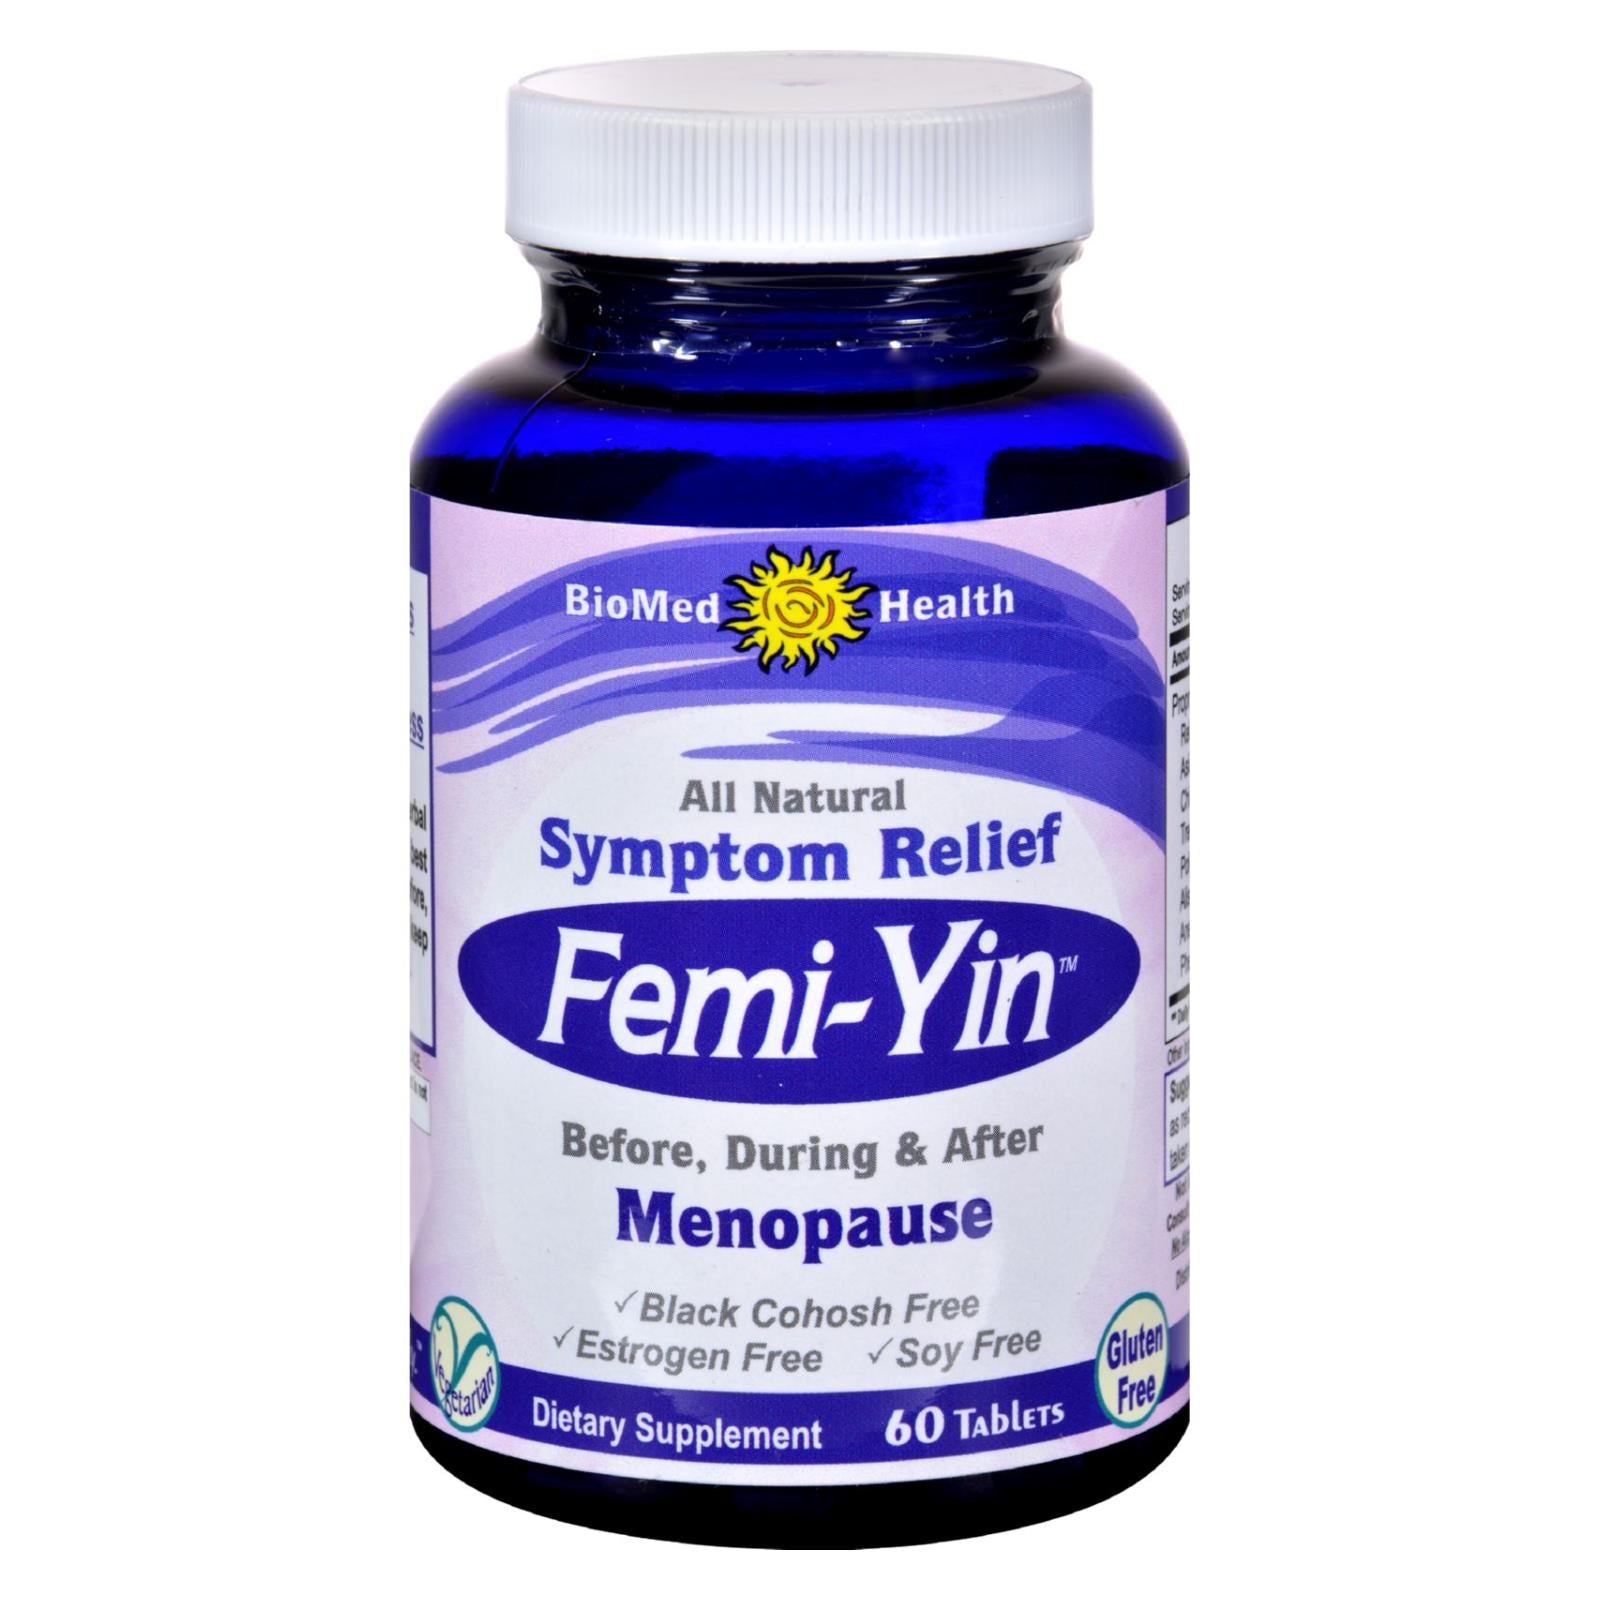 Biomed Health Femi-yin Peri And Menopause Relief - 60 Capsules